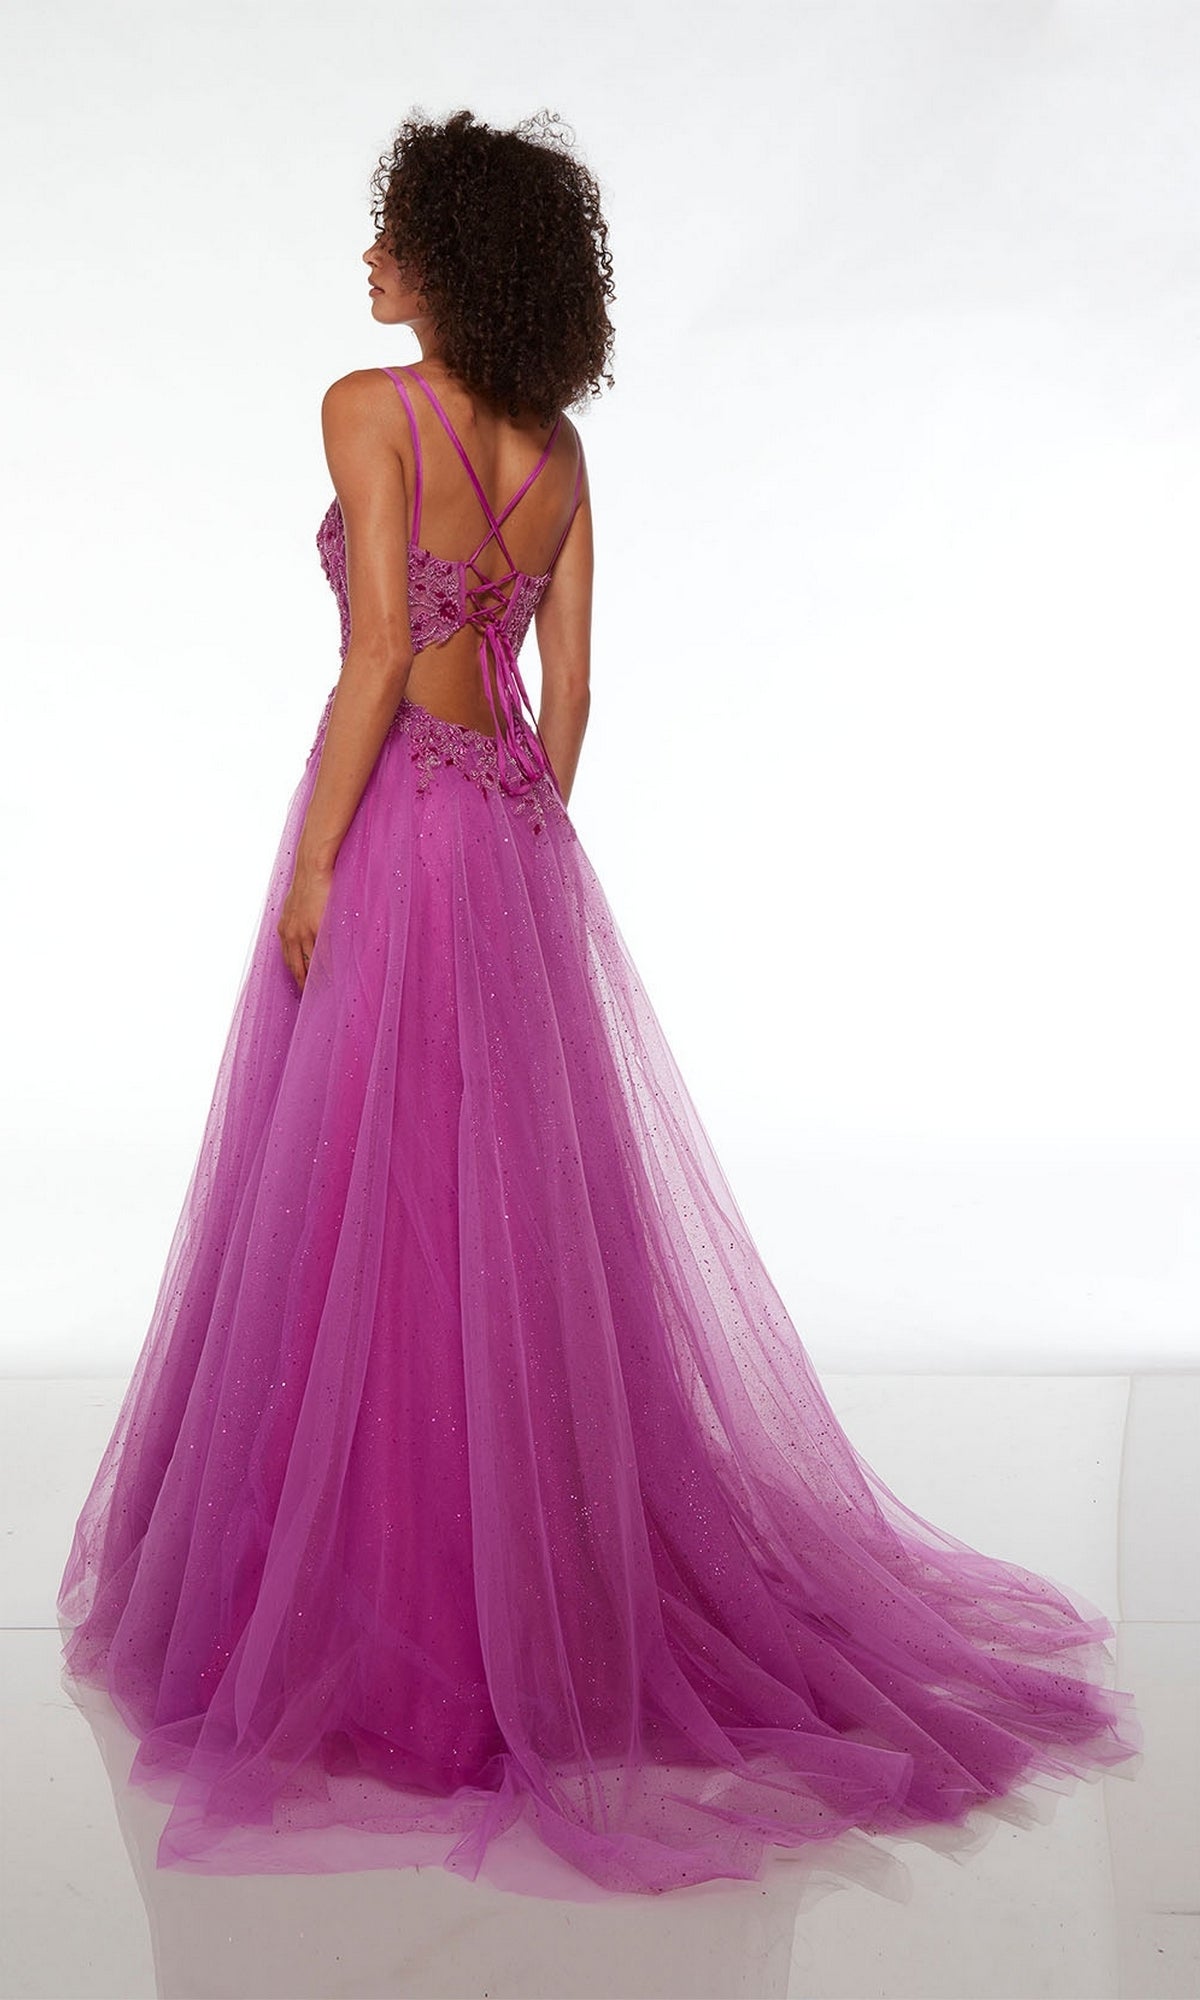 Alyce Long Prom Dress 61513